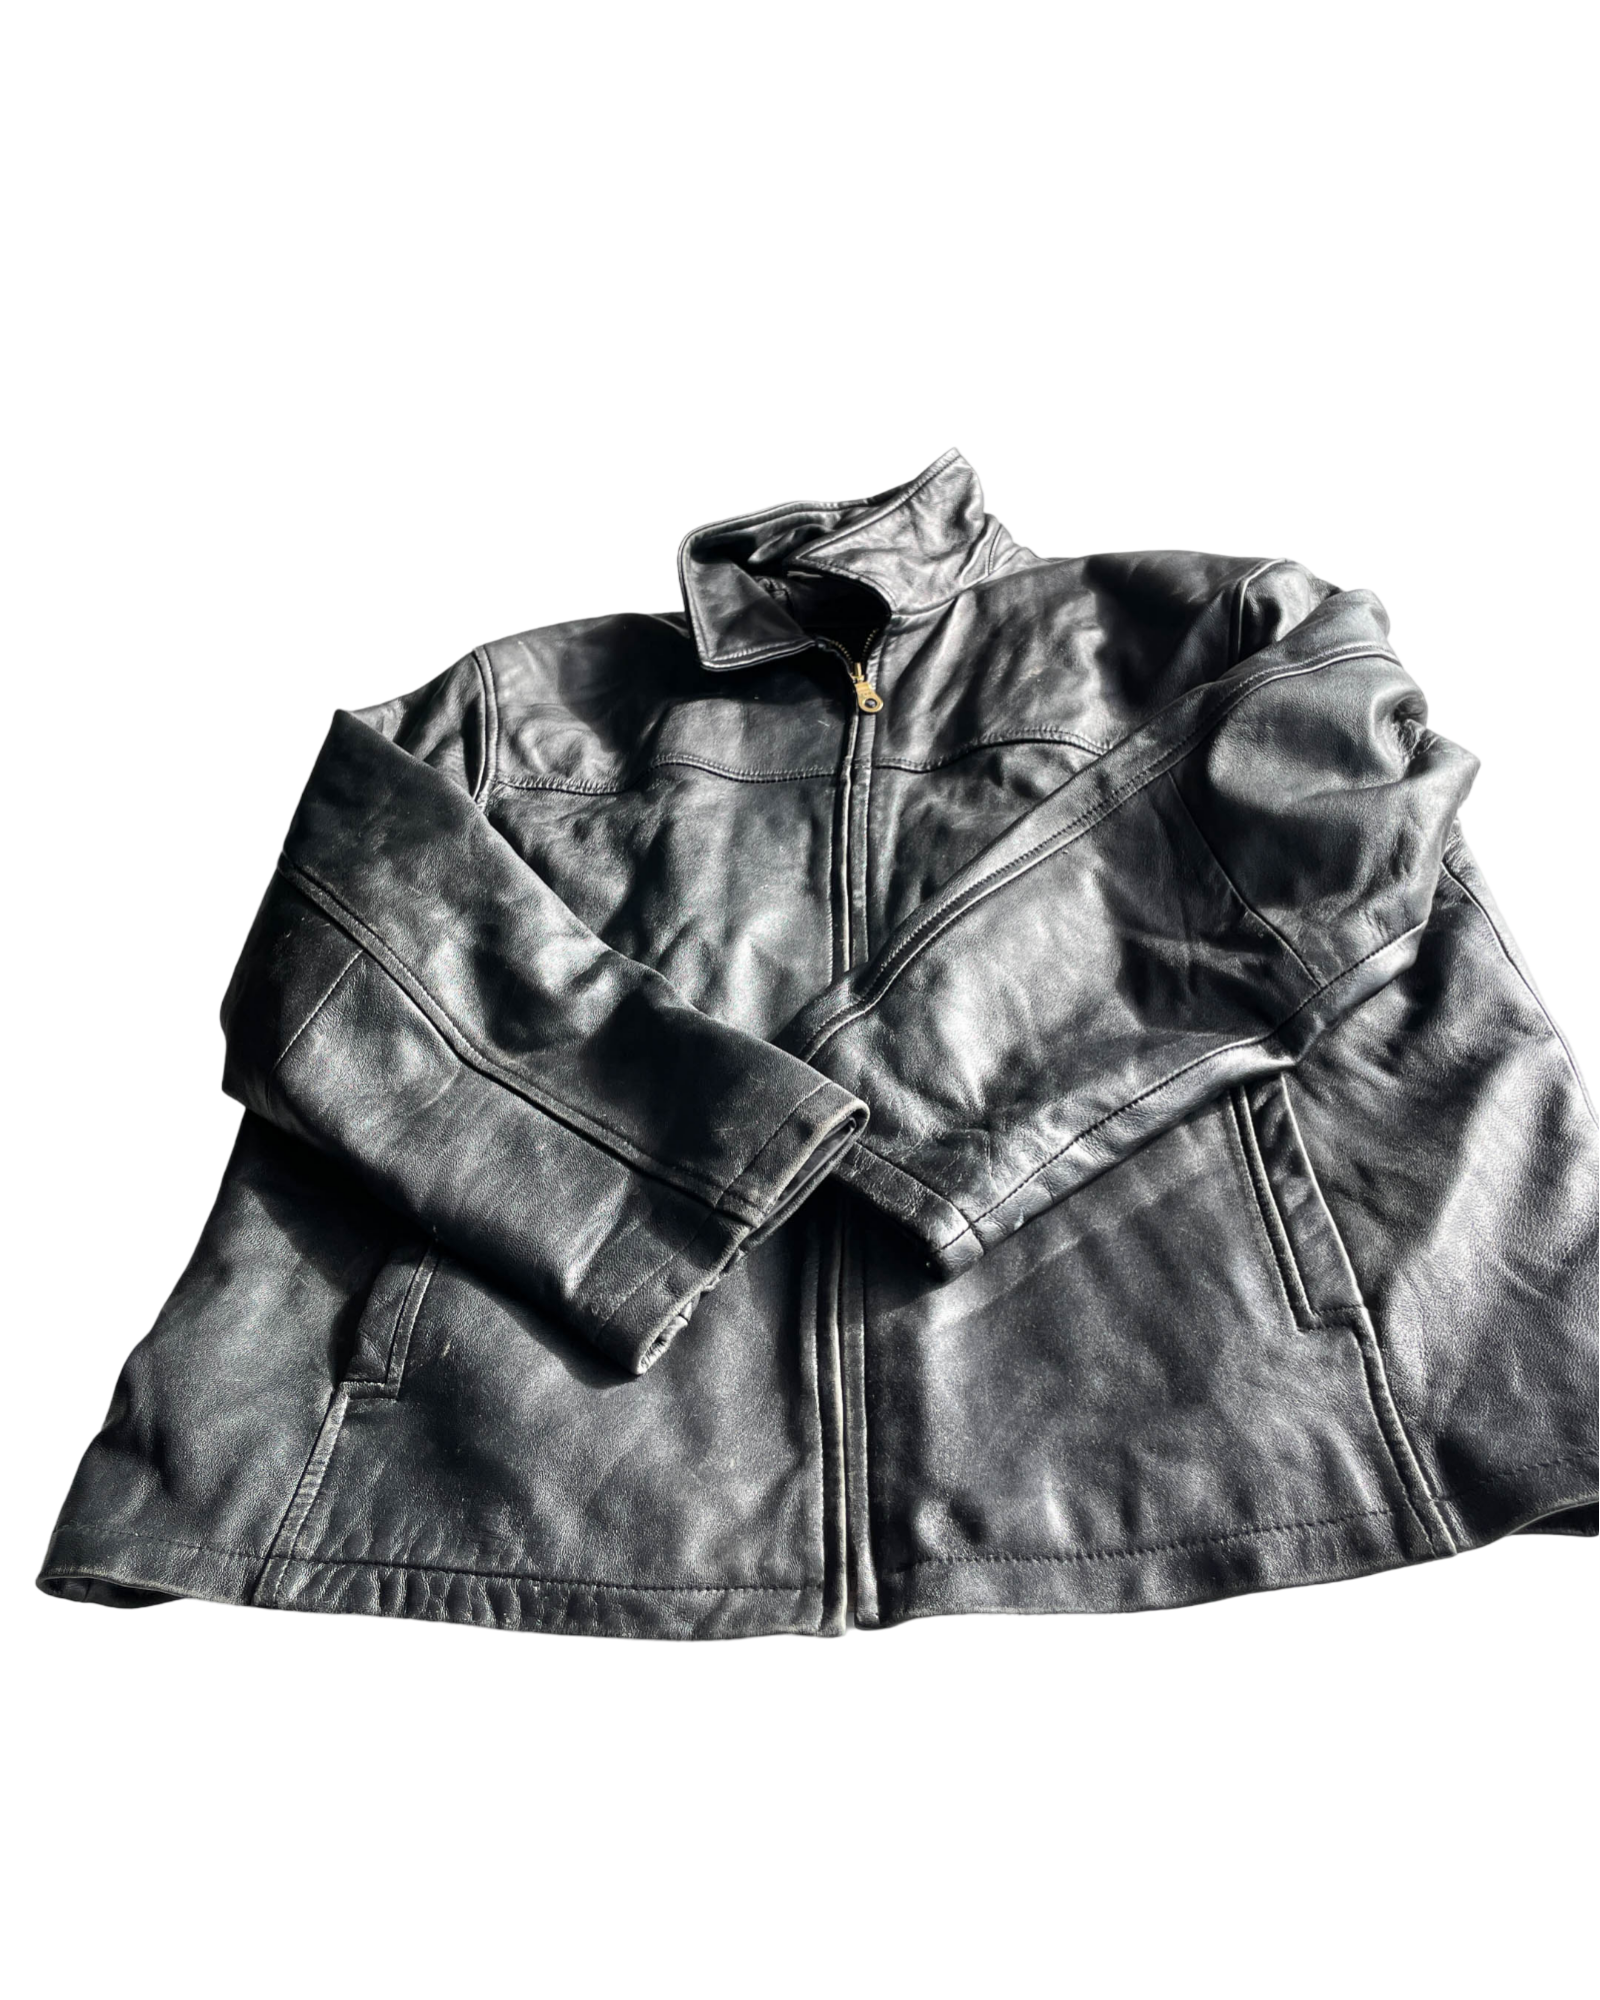 Vintage Black Durable Leather Jacket. In size XL/XXL